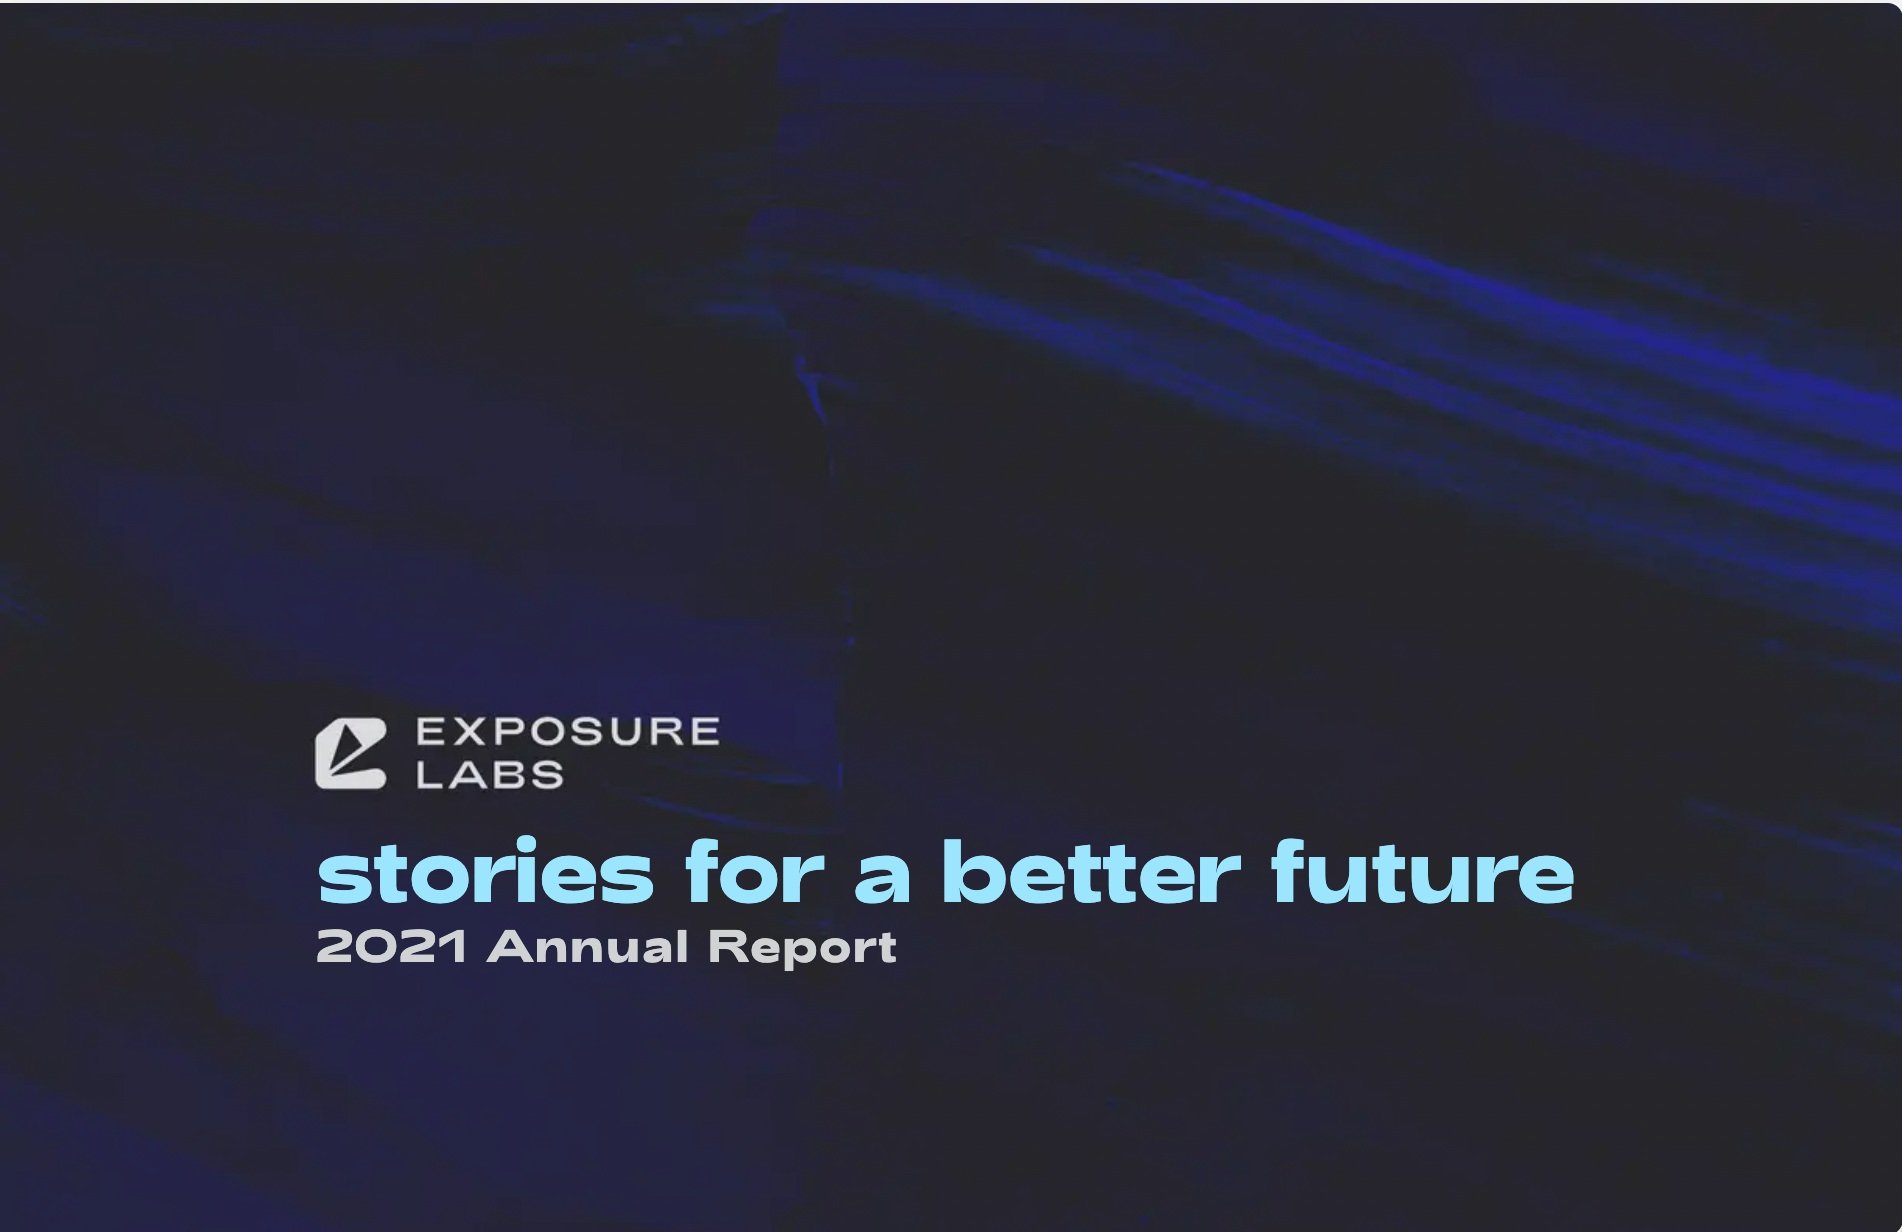 EXPOSURE LABS 2021 ANNUAL REPORT